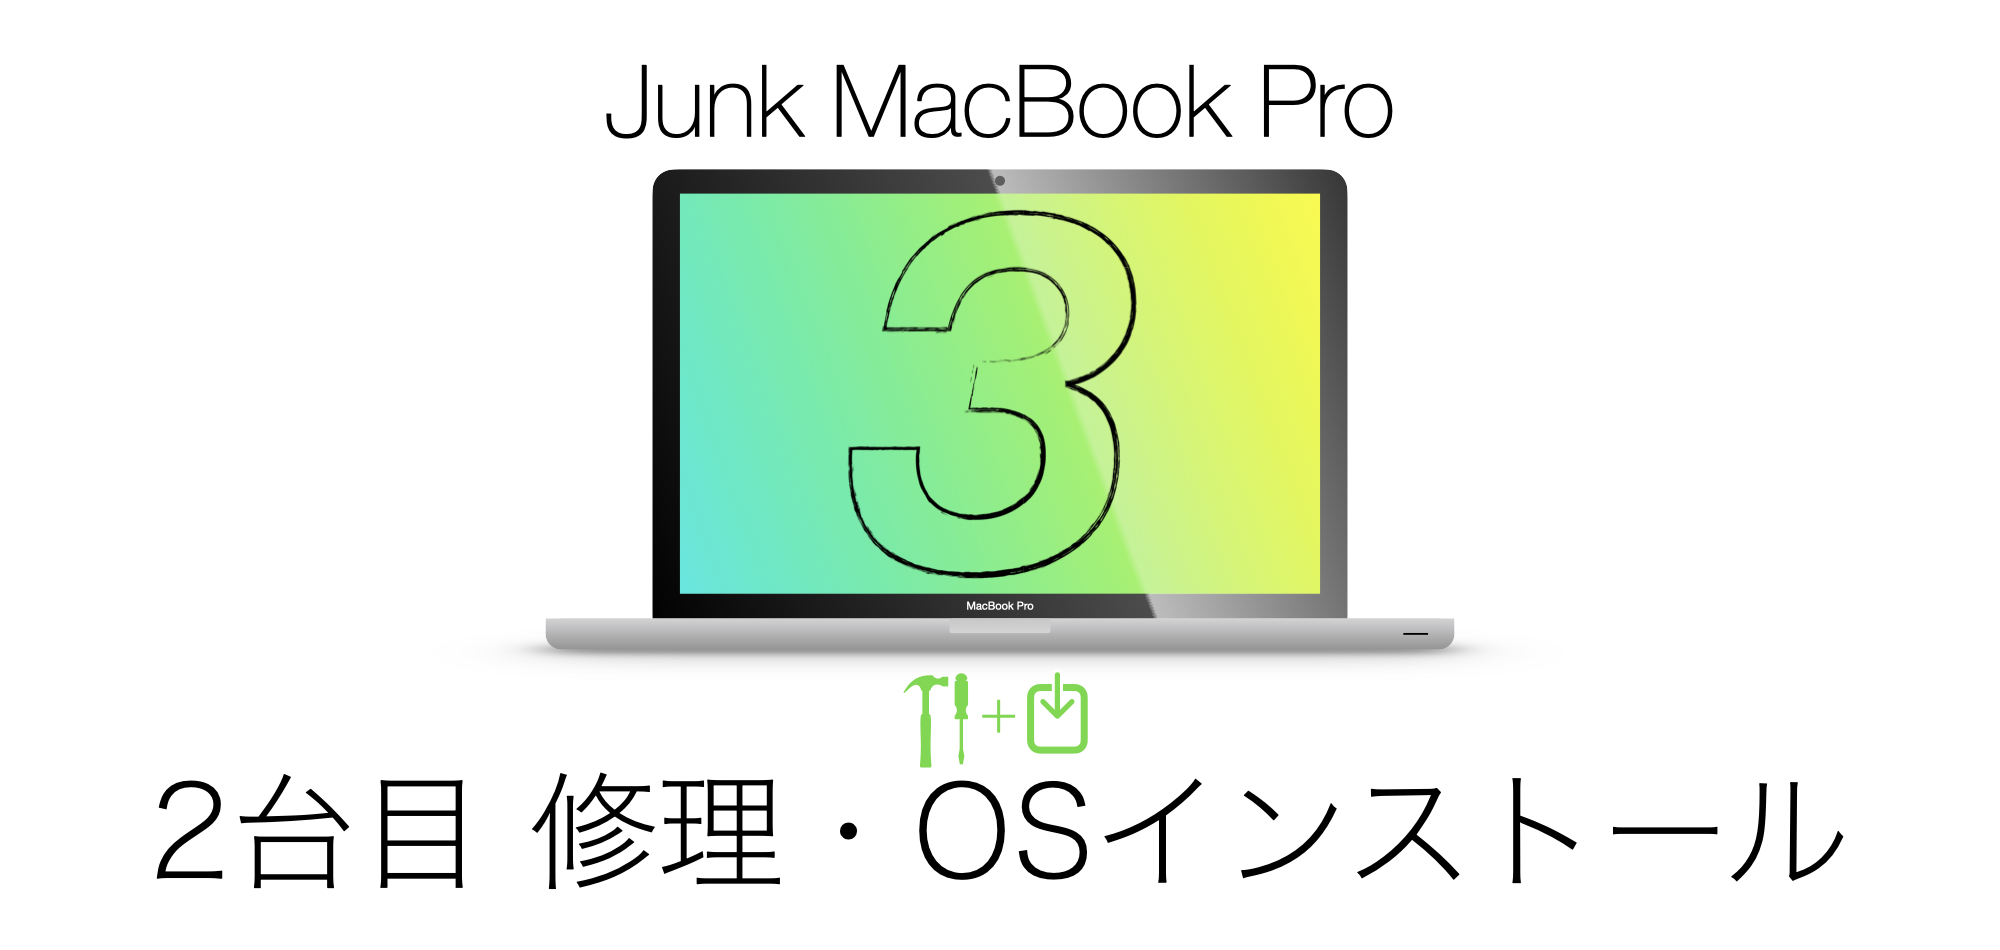 MAC book pro ジャンク - タブレット